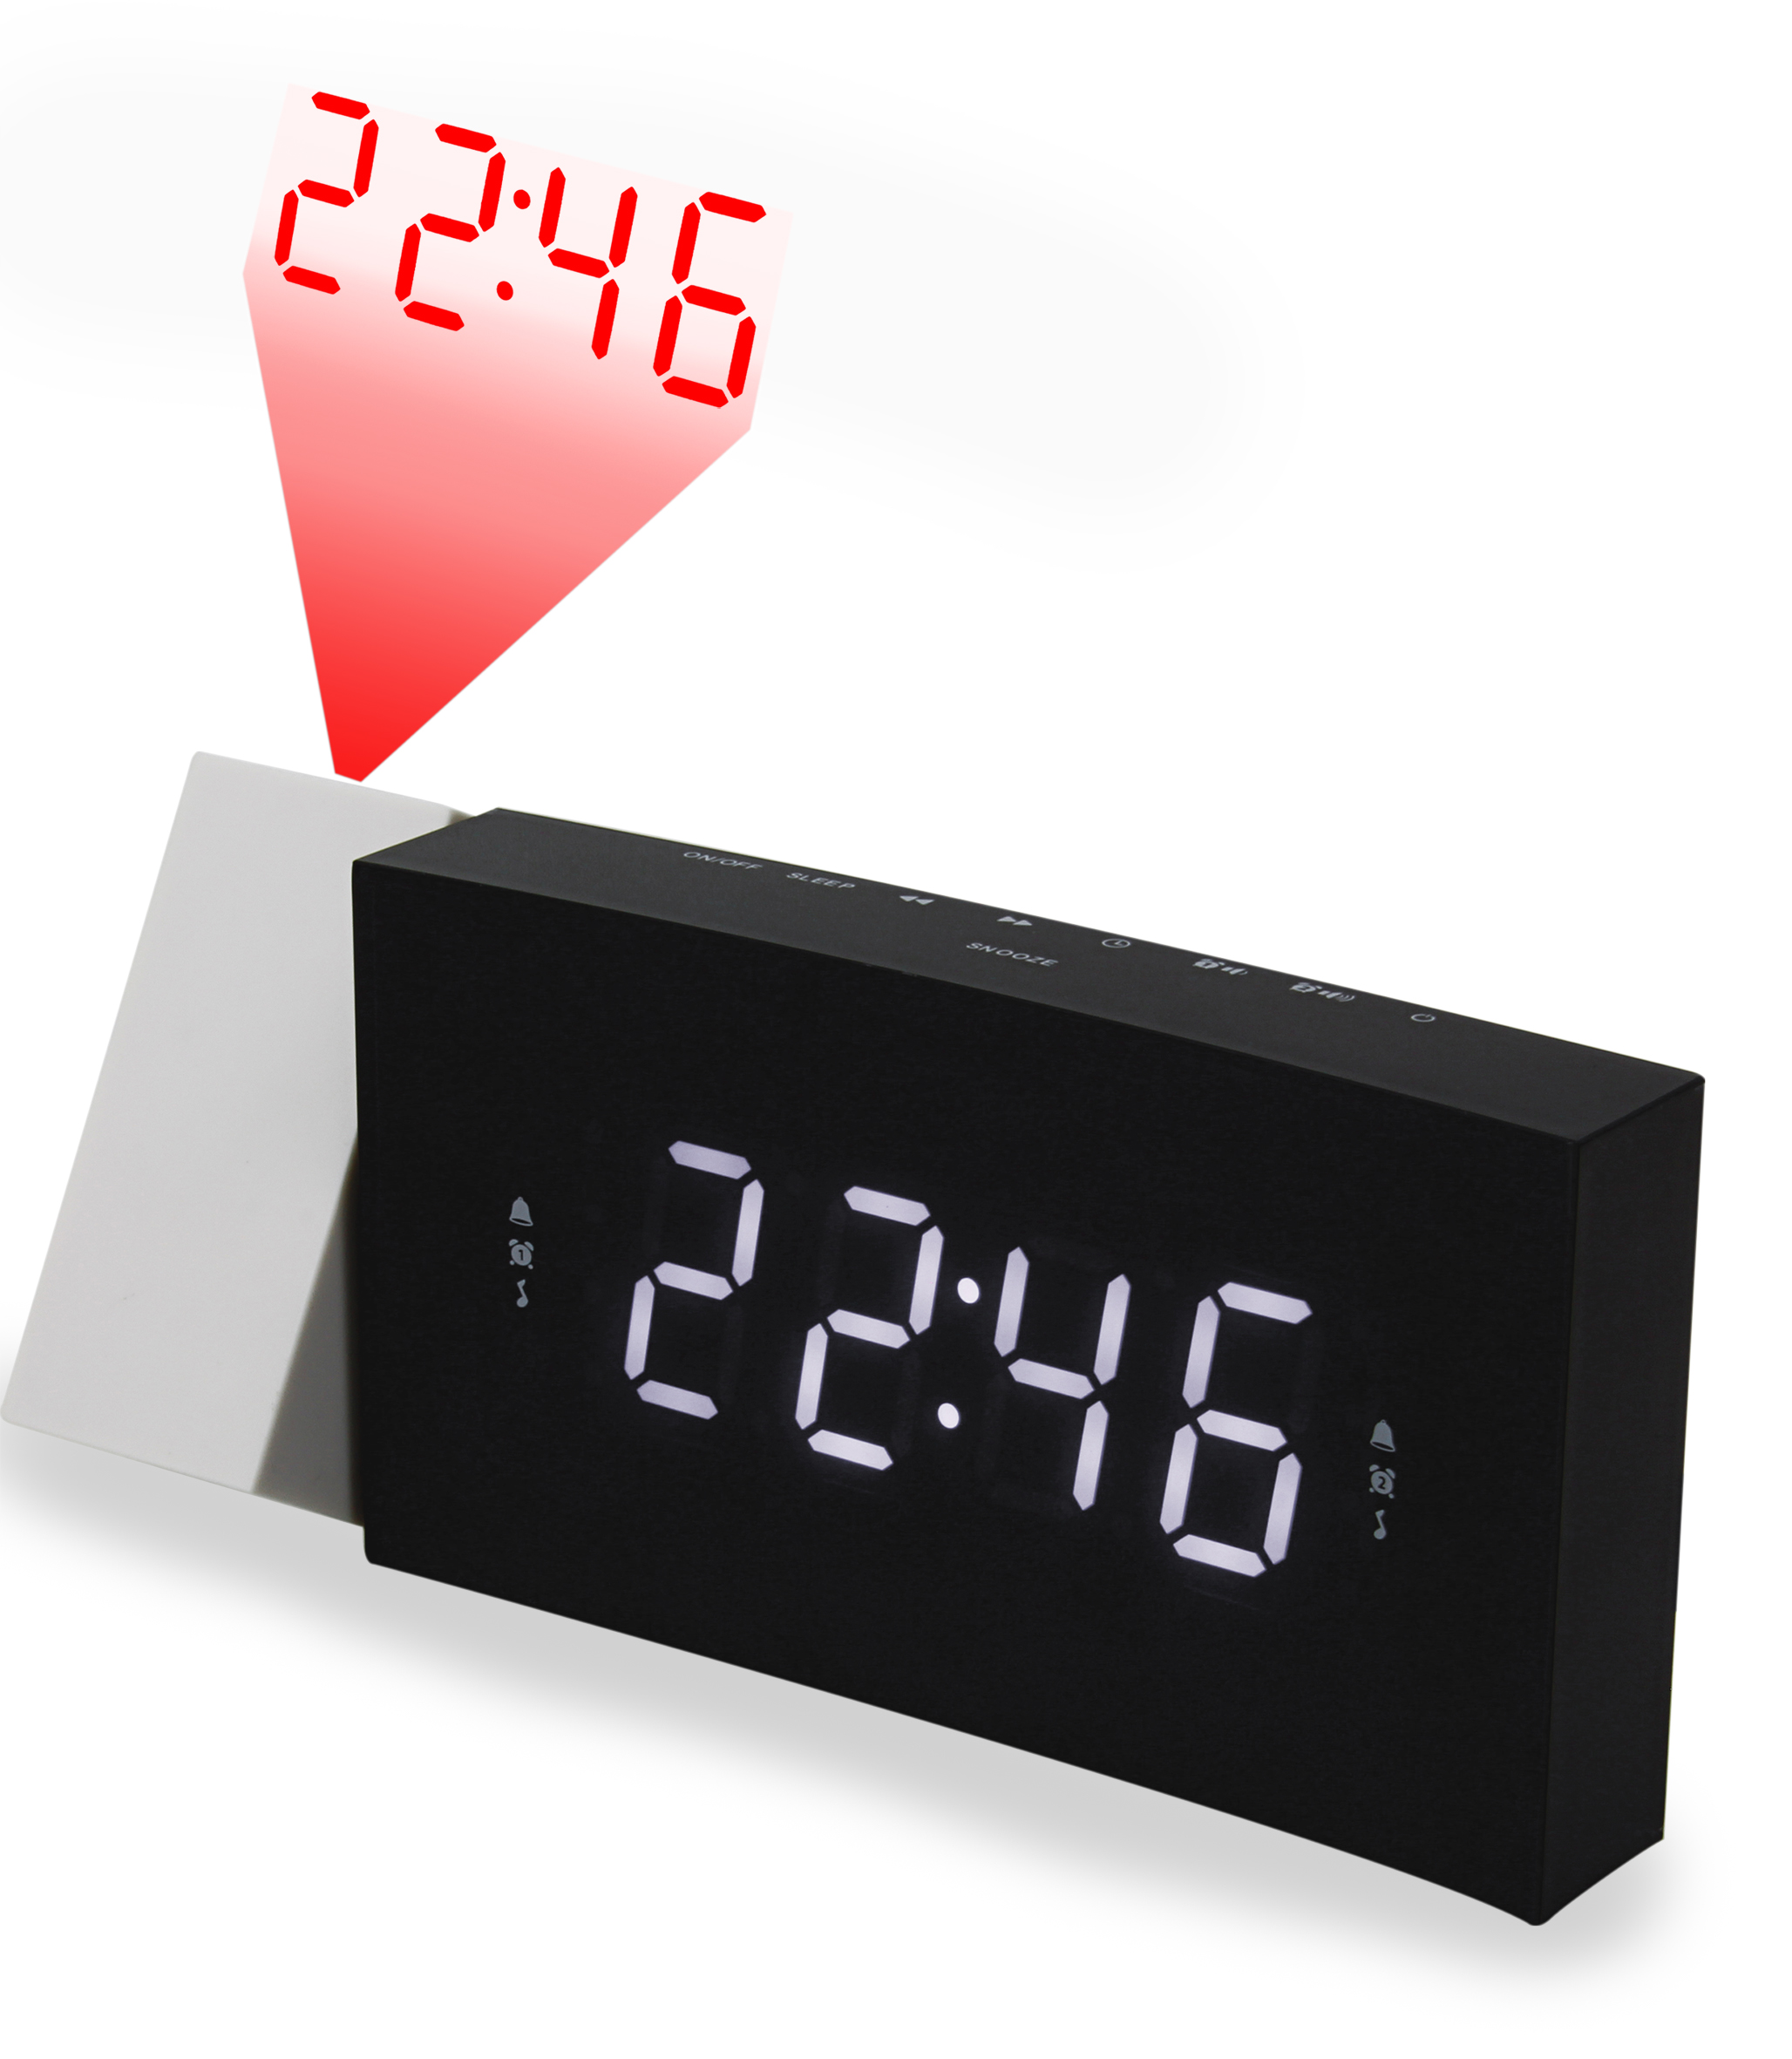 regulable Sound master ur8600 jumbo LED FM PLL relojes radio despertador con proyección 